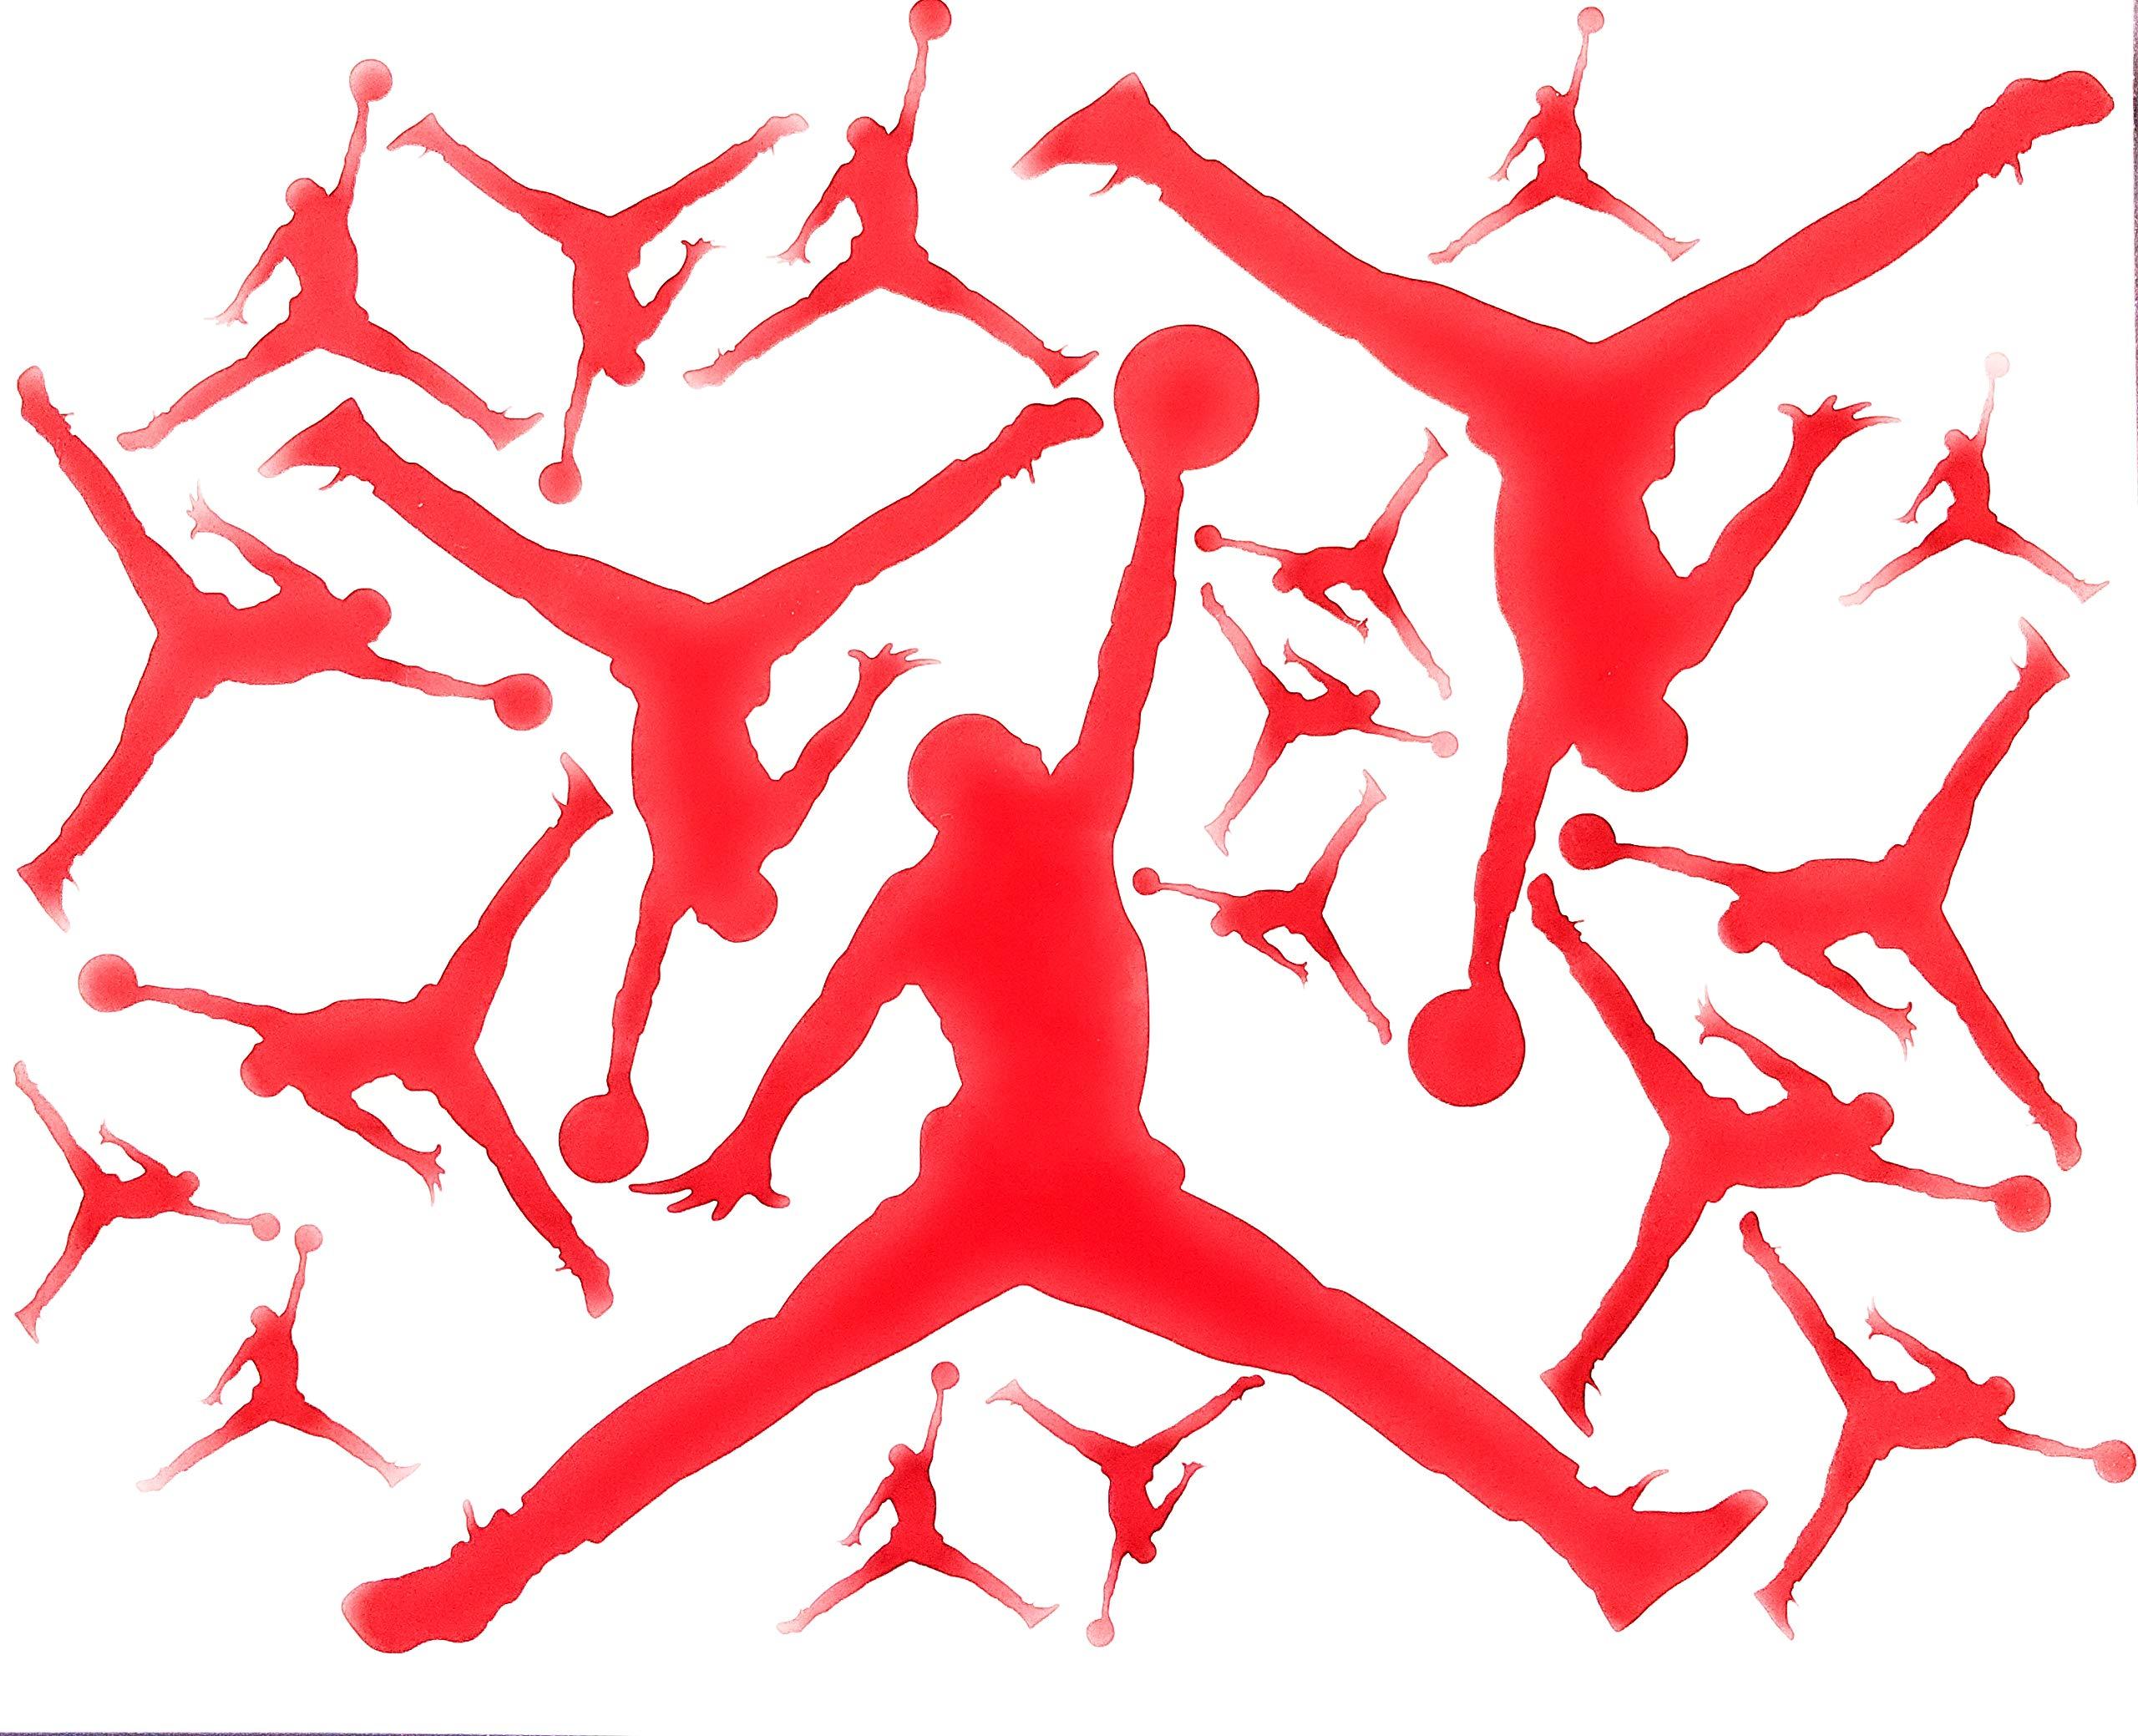 Green Jumpman Logo - Amazon.com : 19 Assorted Red Air Jordan - Jumpman Logo Vinyl Label ...